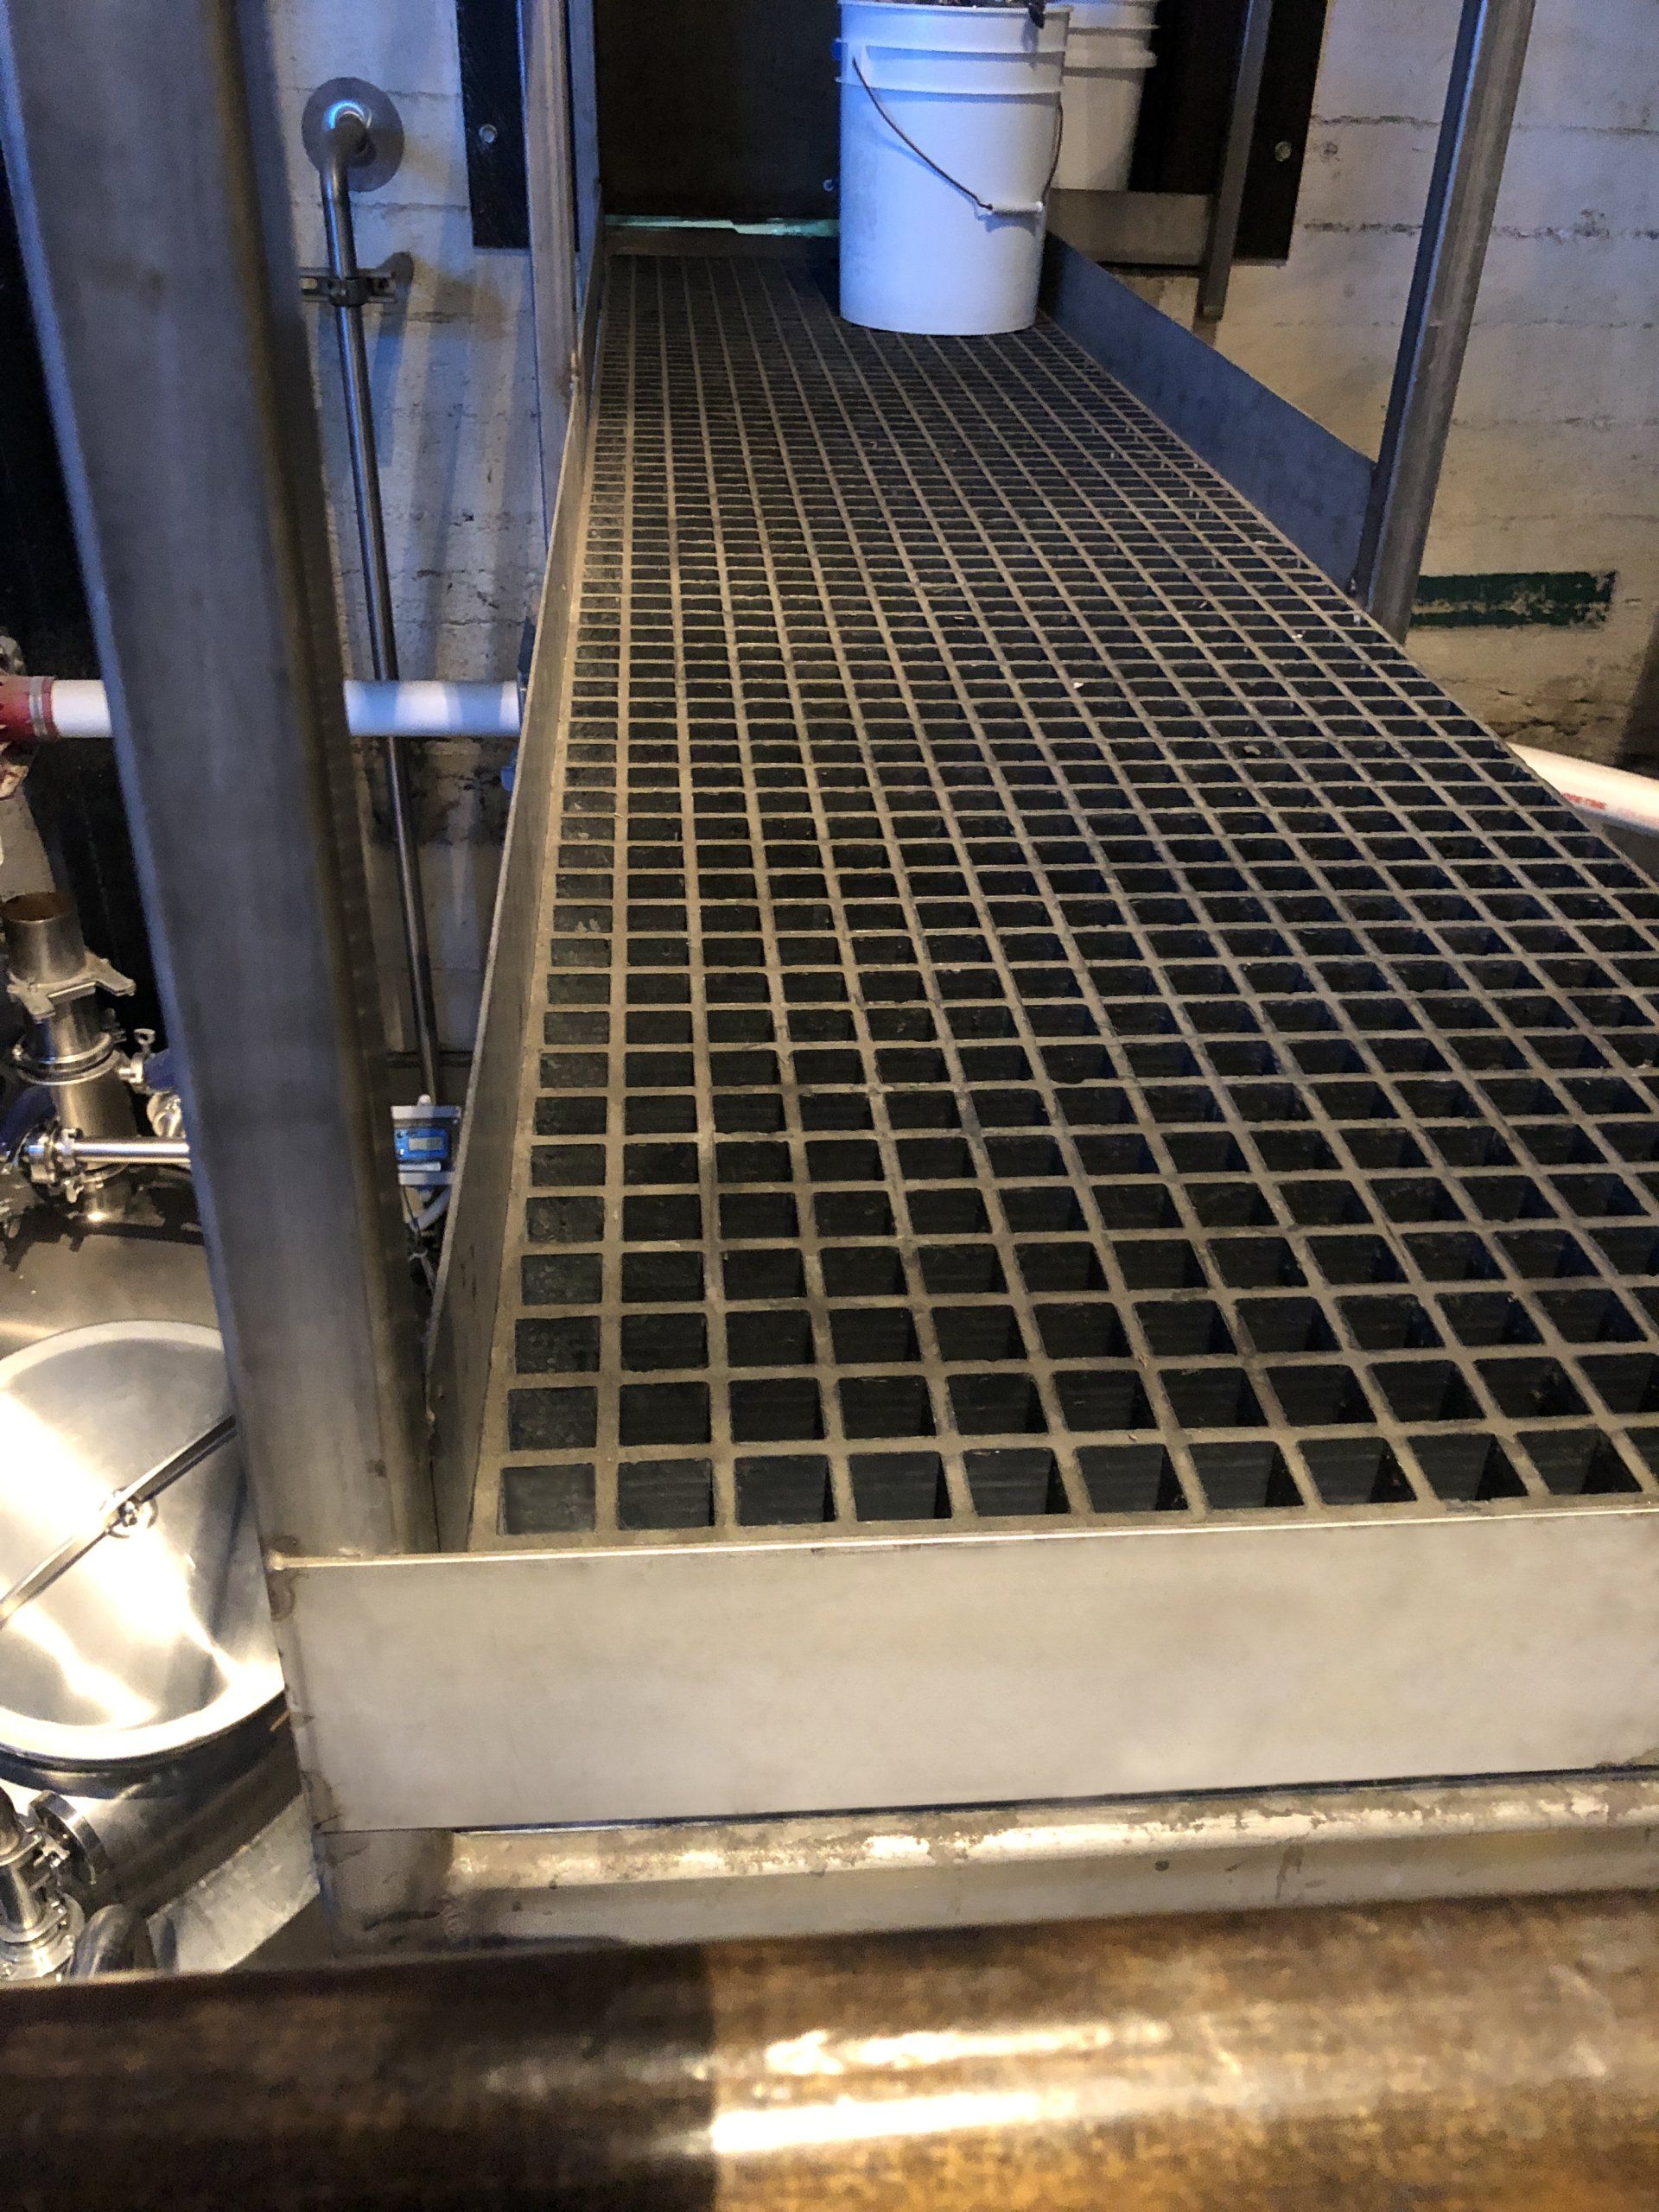 metal frame holding walkway brewery equipment